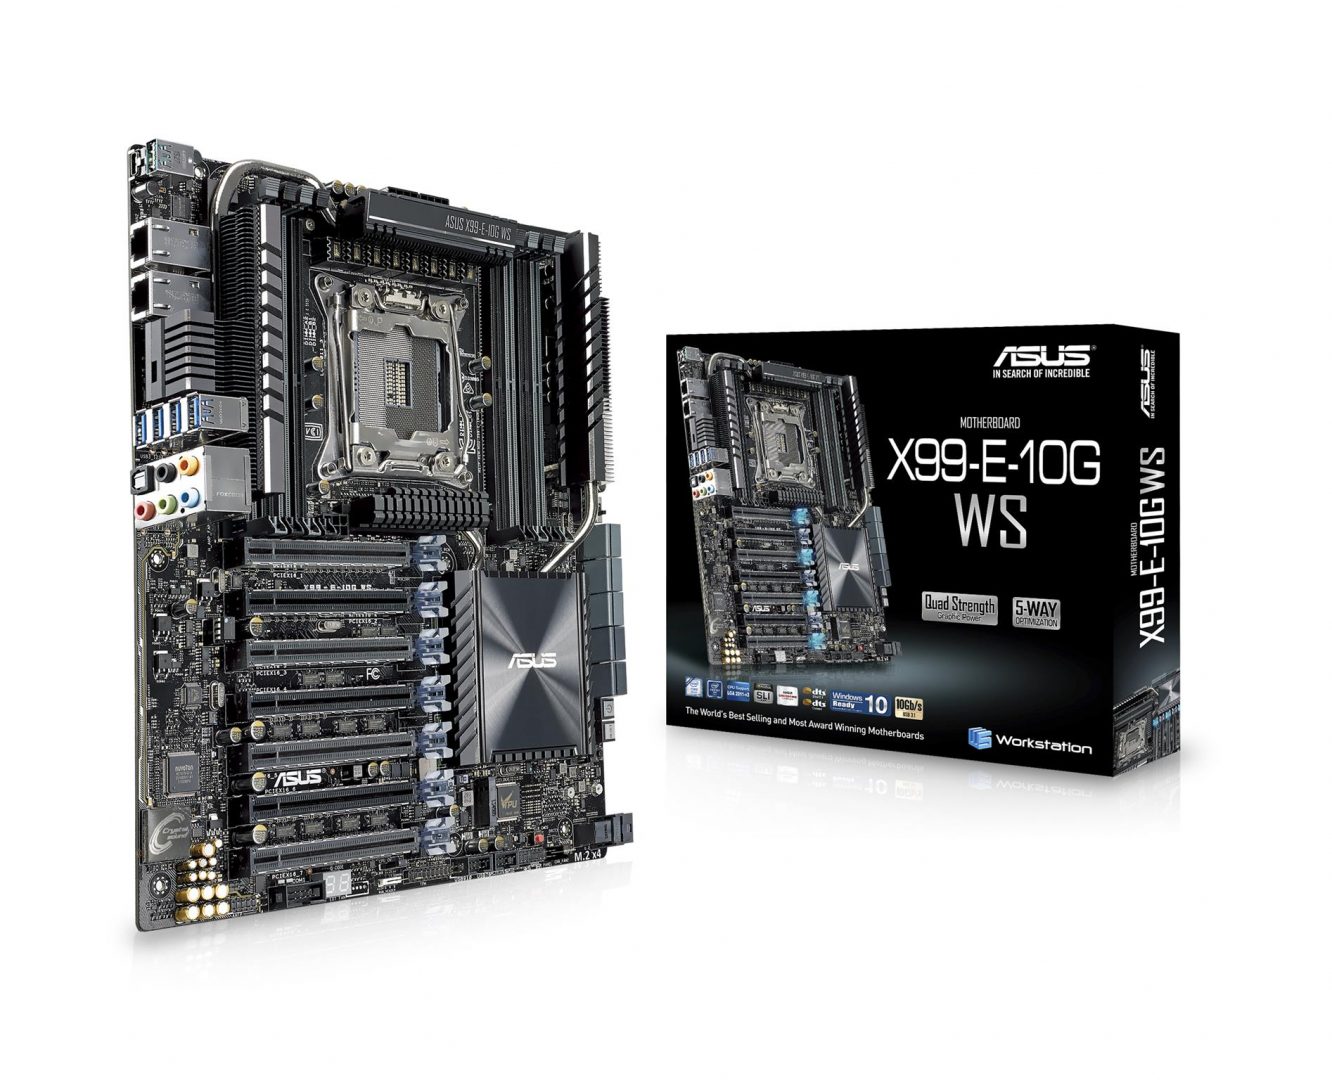 ASUS Announces X99-E-10G WS